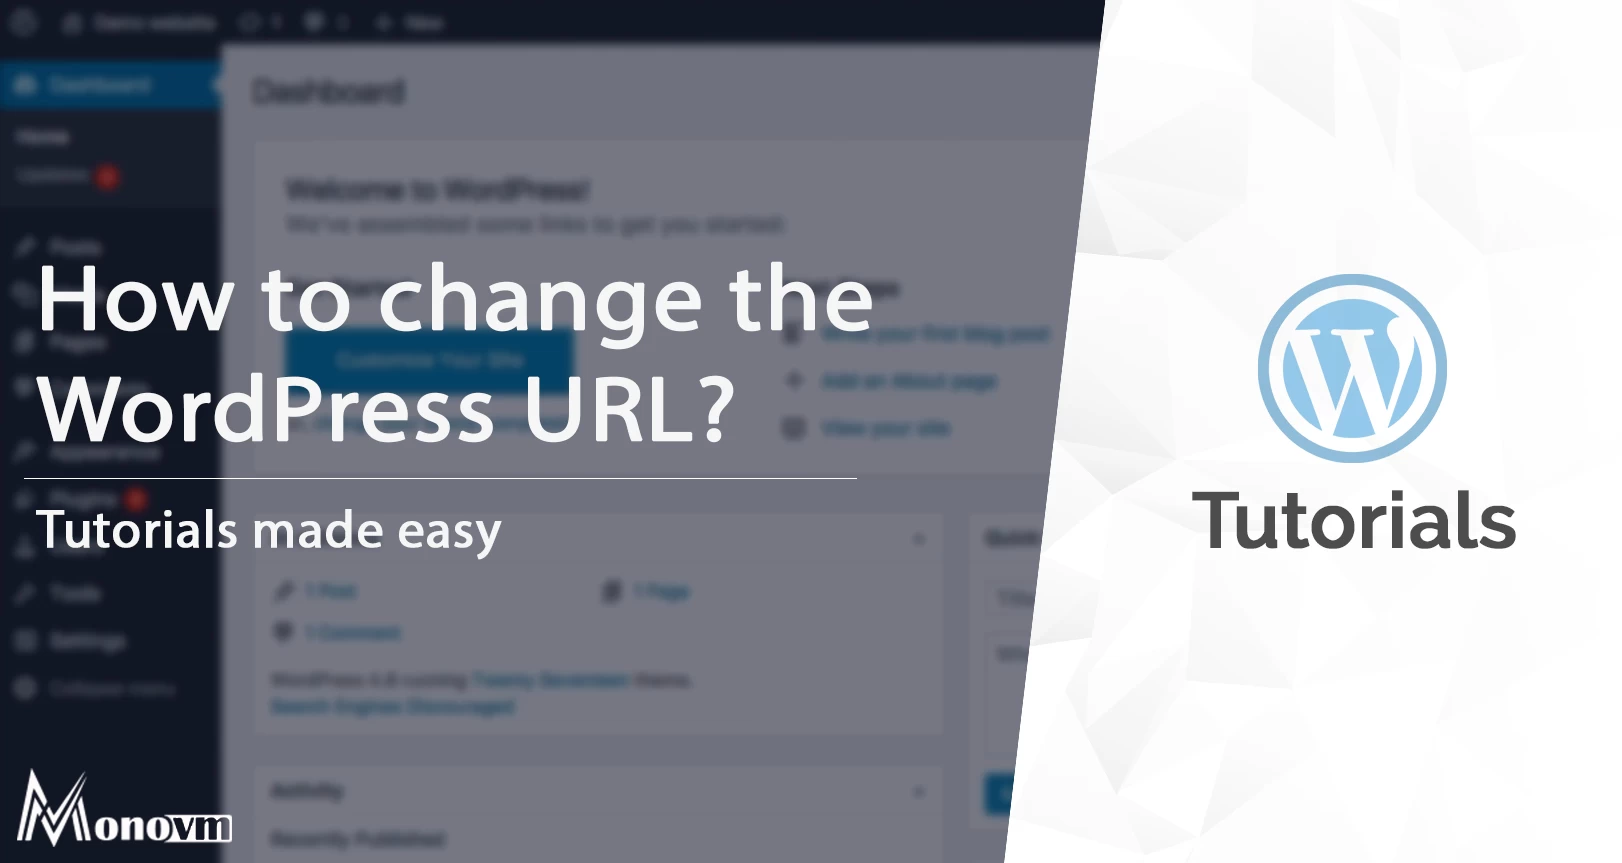 How to change the WordPress URL?